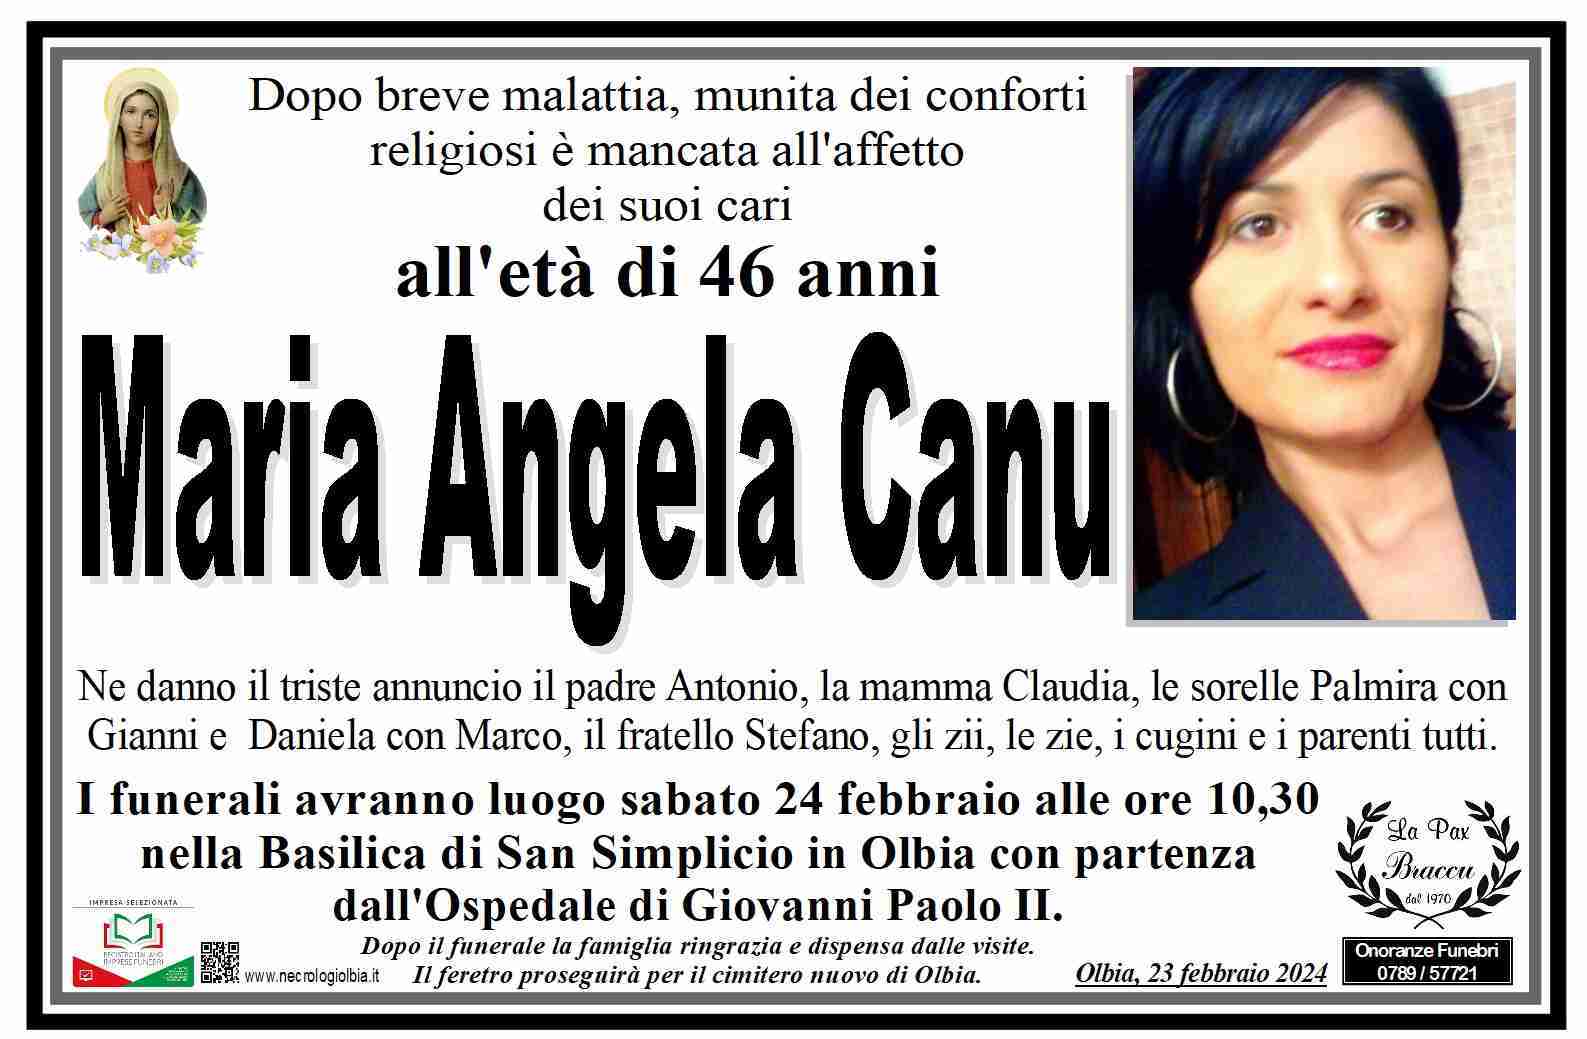 Maria Angela Canu